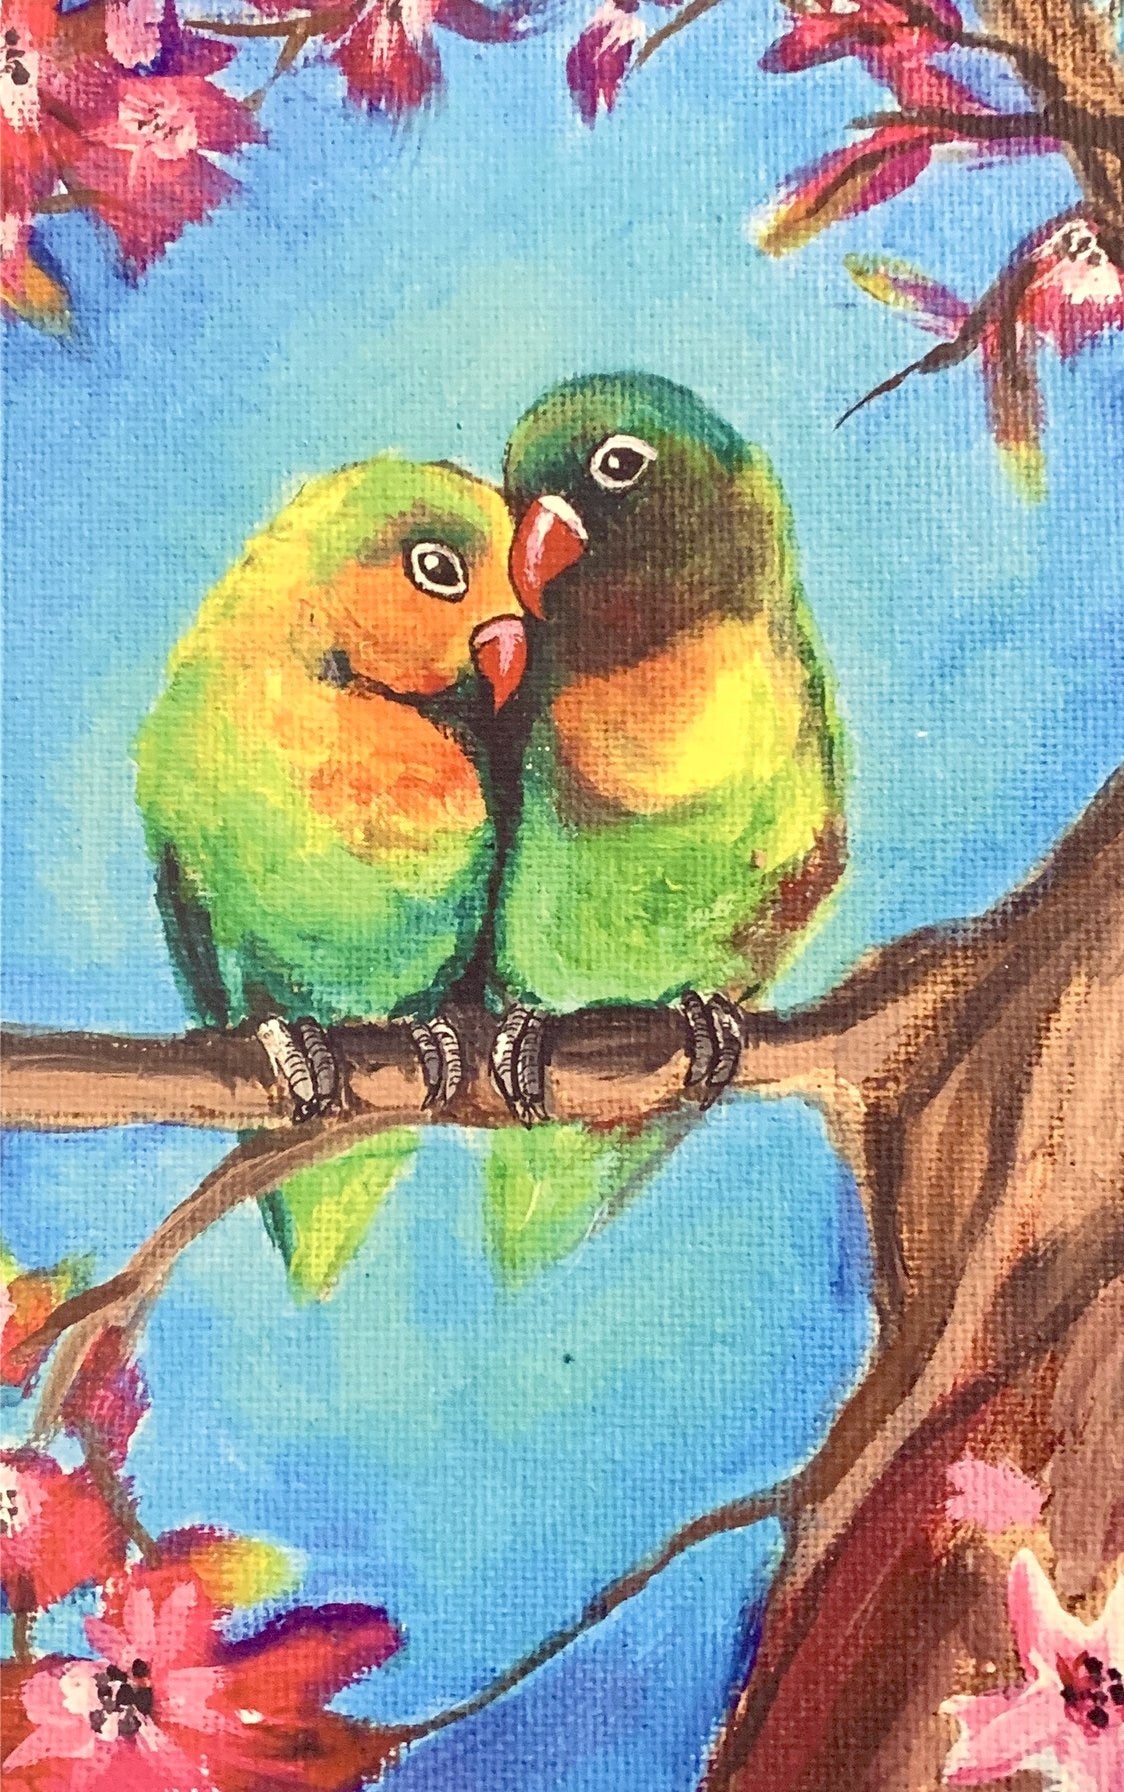 Love Birds Art Card